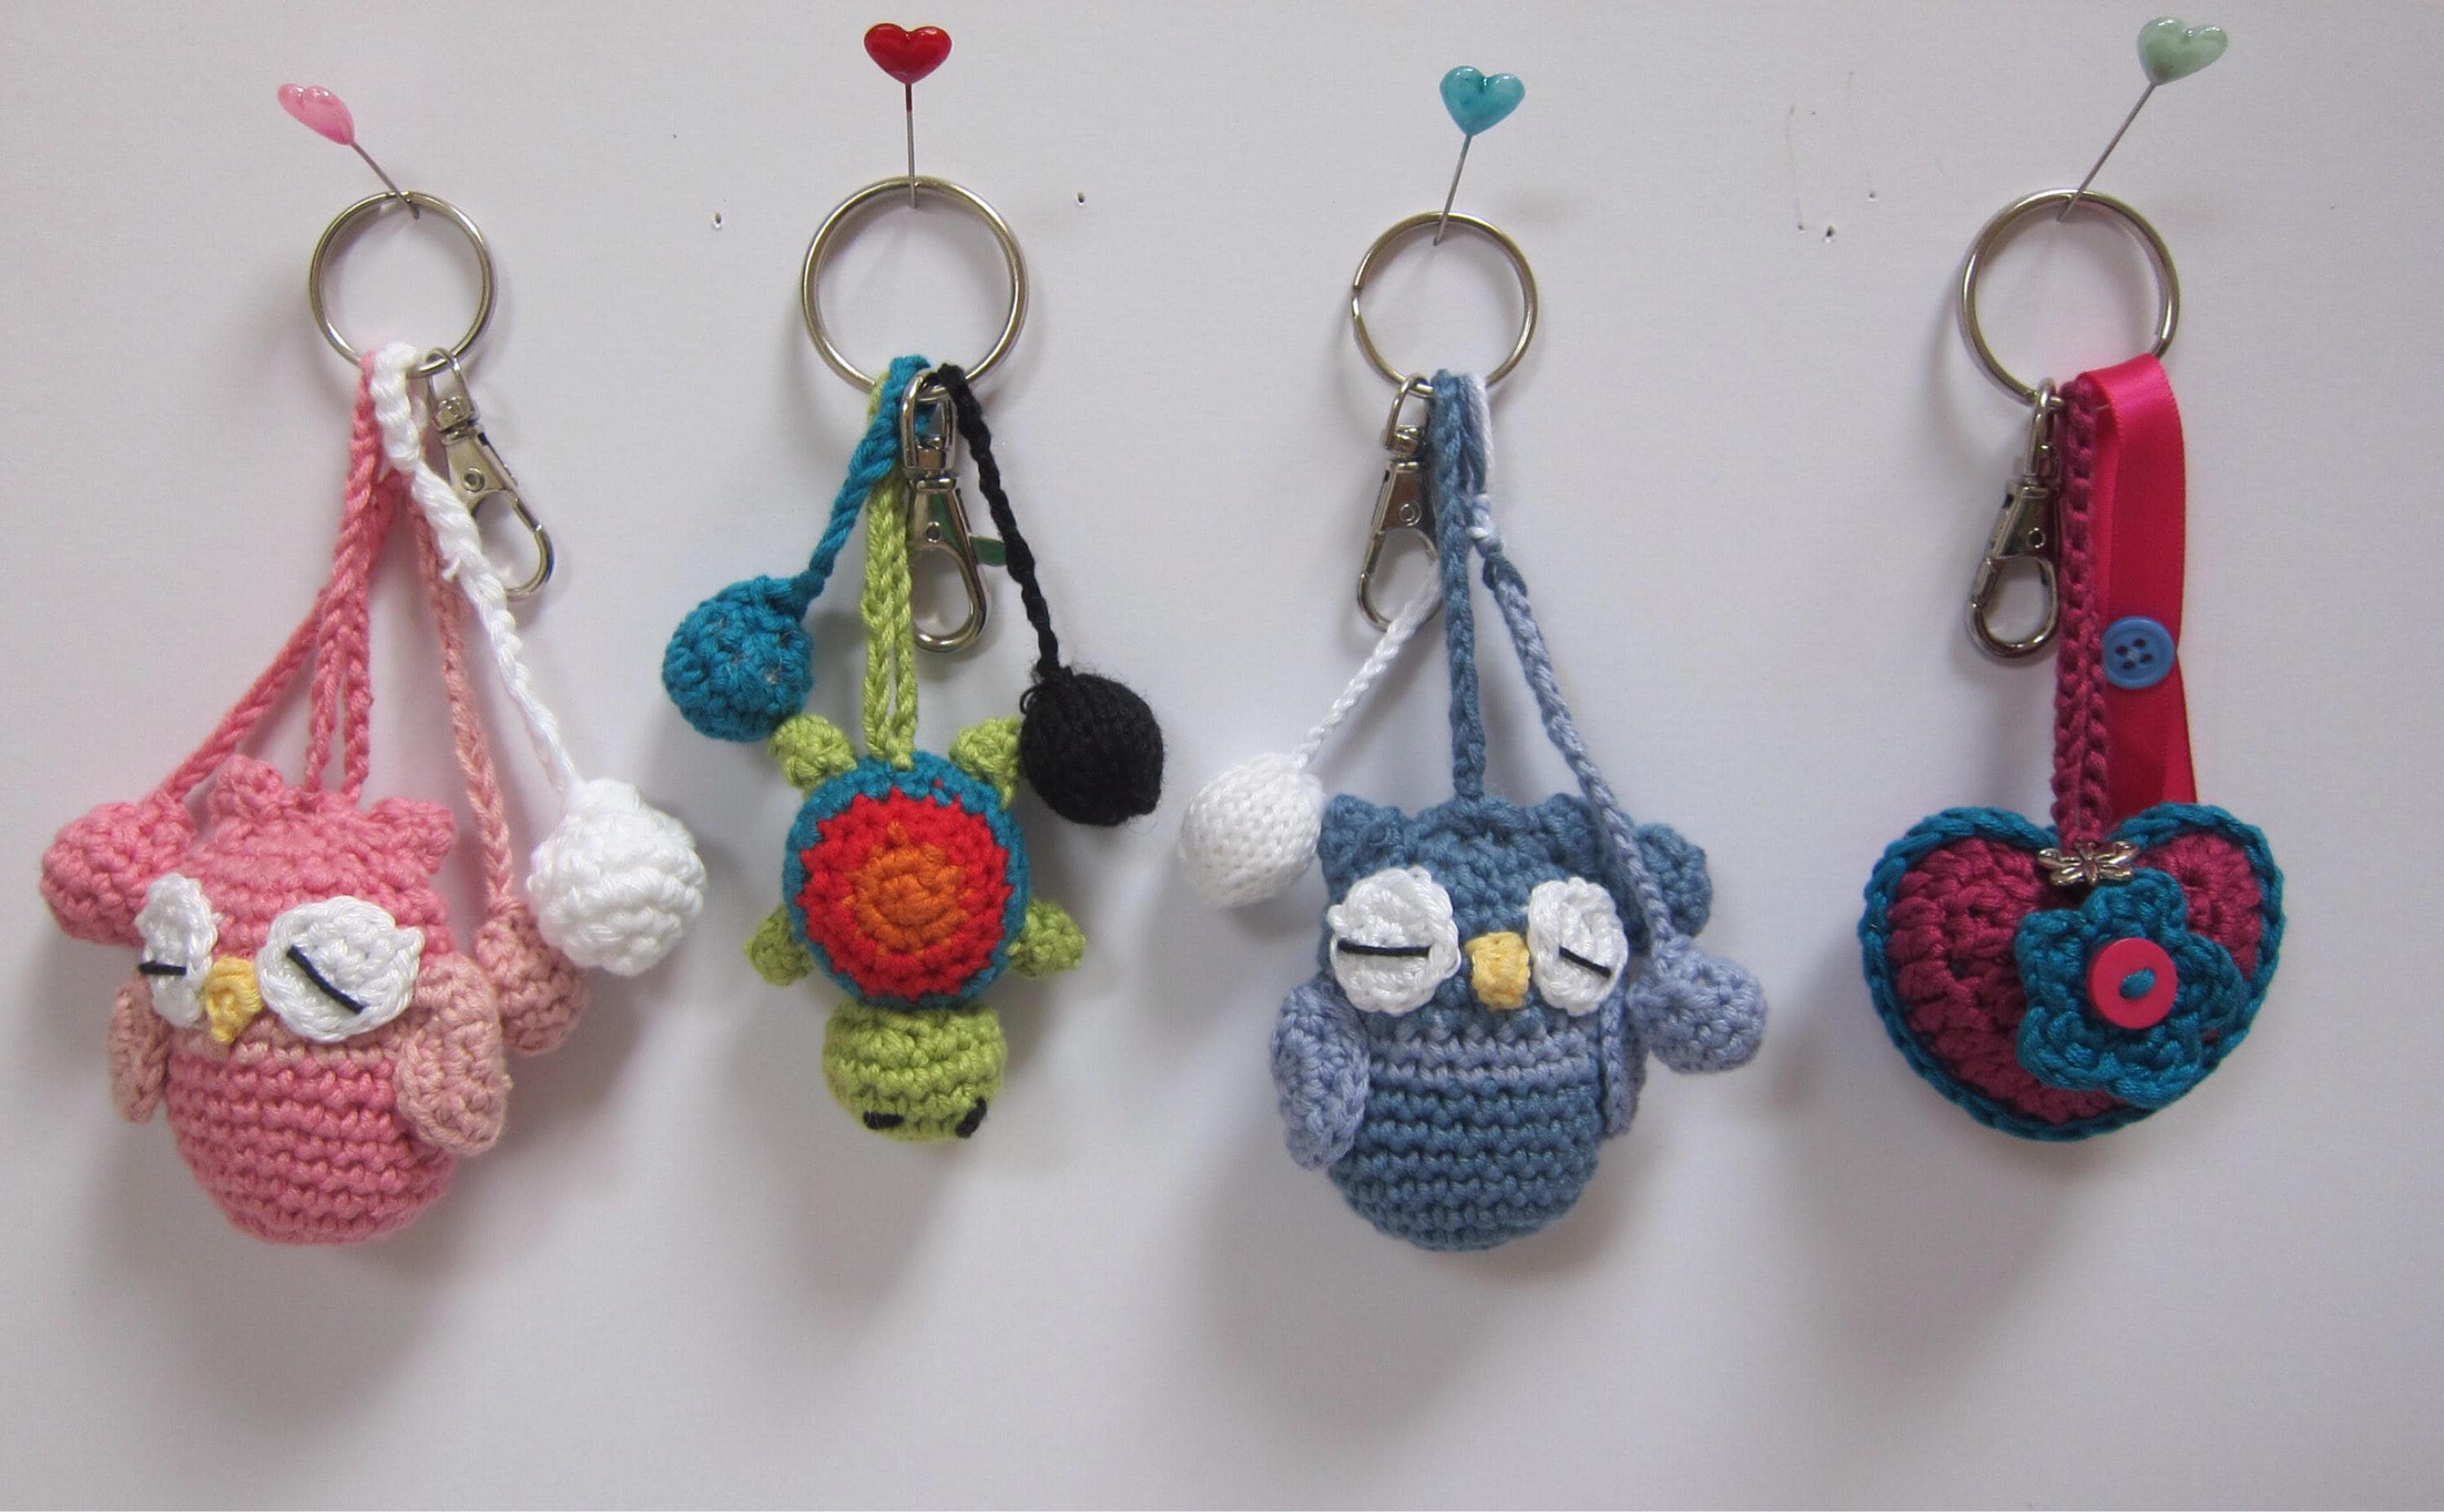 Buy Handmade Bag Charm / Crochet Handbag Charm / Keyring / Online